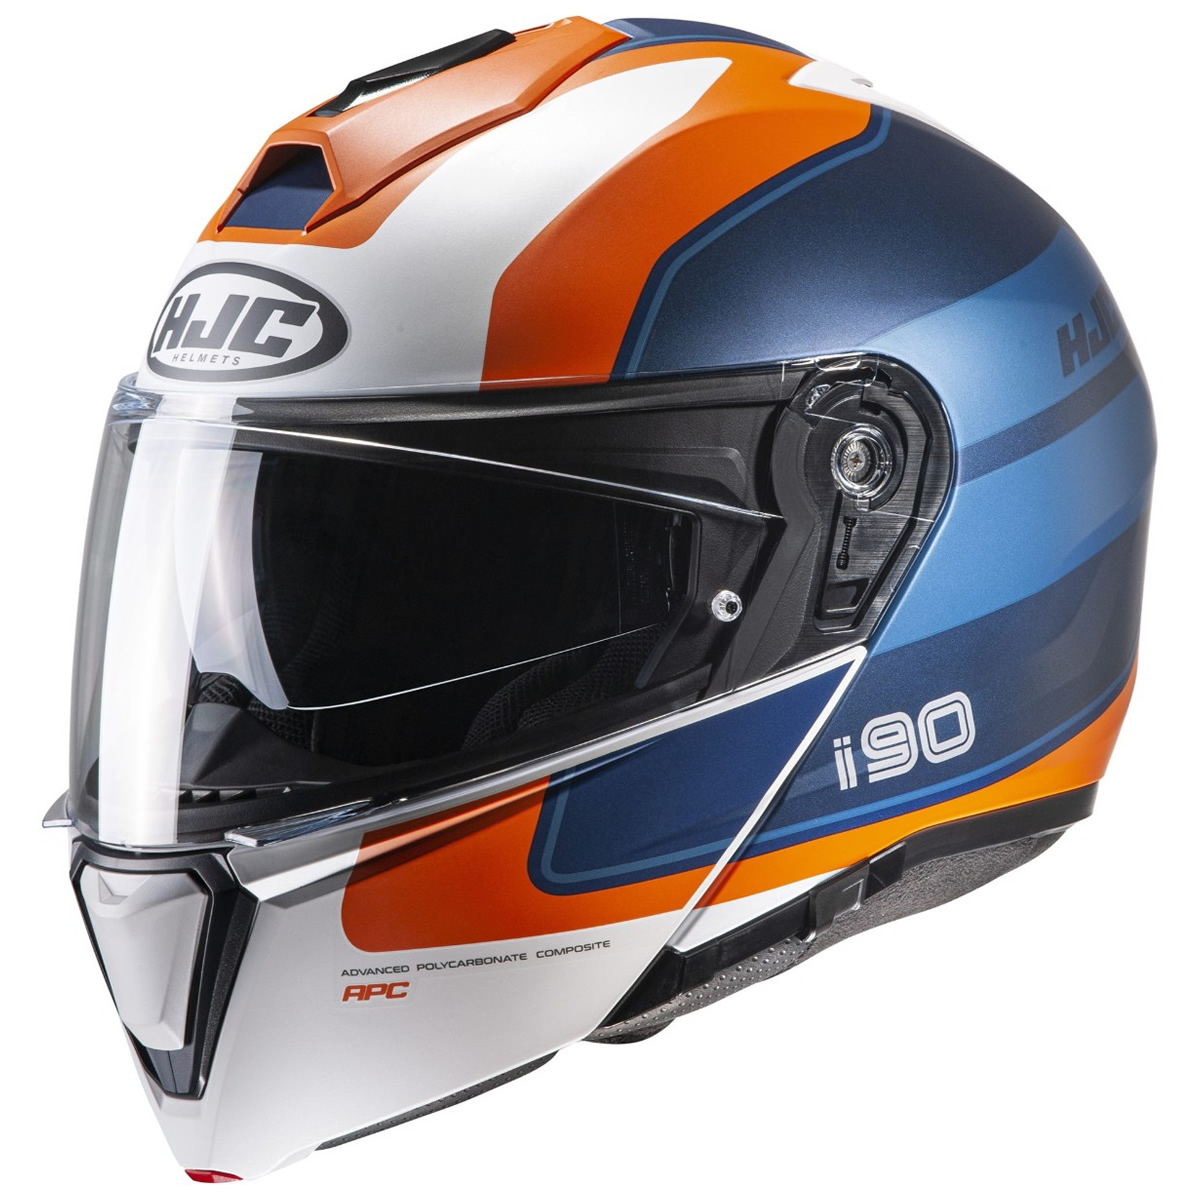 HJC Helm i90 Wasco MC27SF, weiß-blau-orange matt